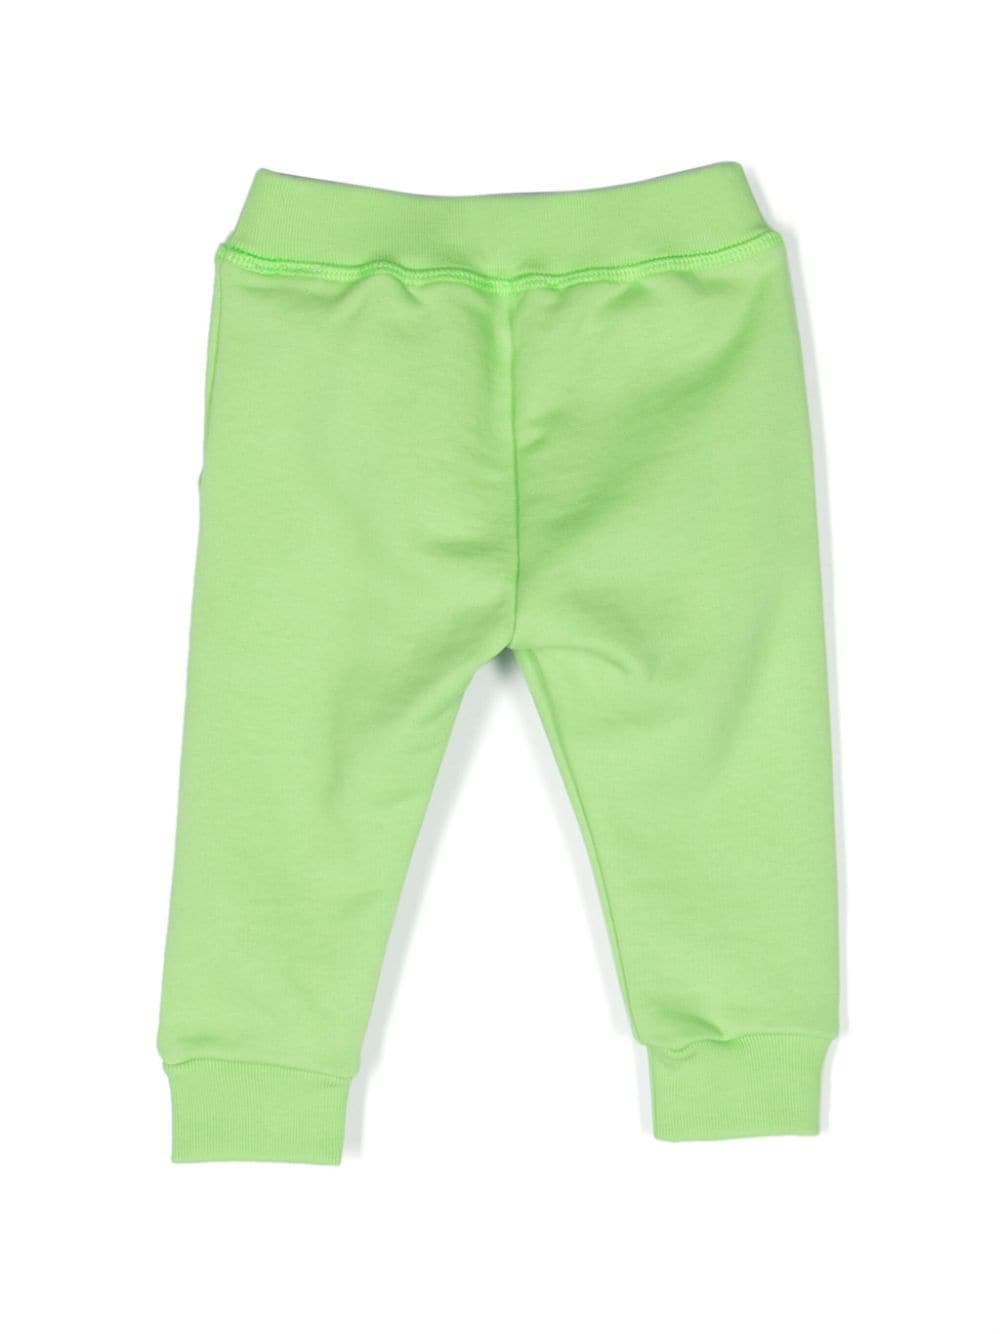 Fluorescent green sports trousers for newborns